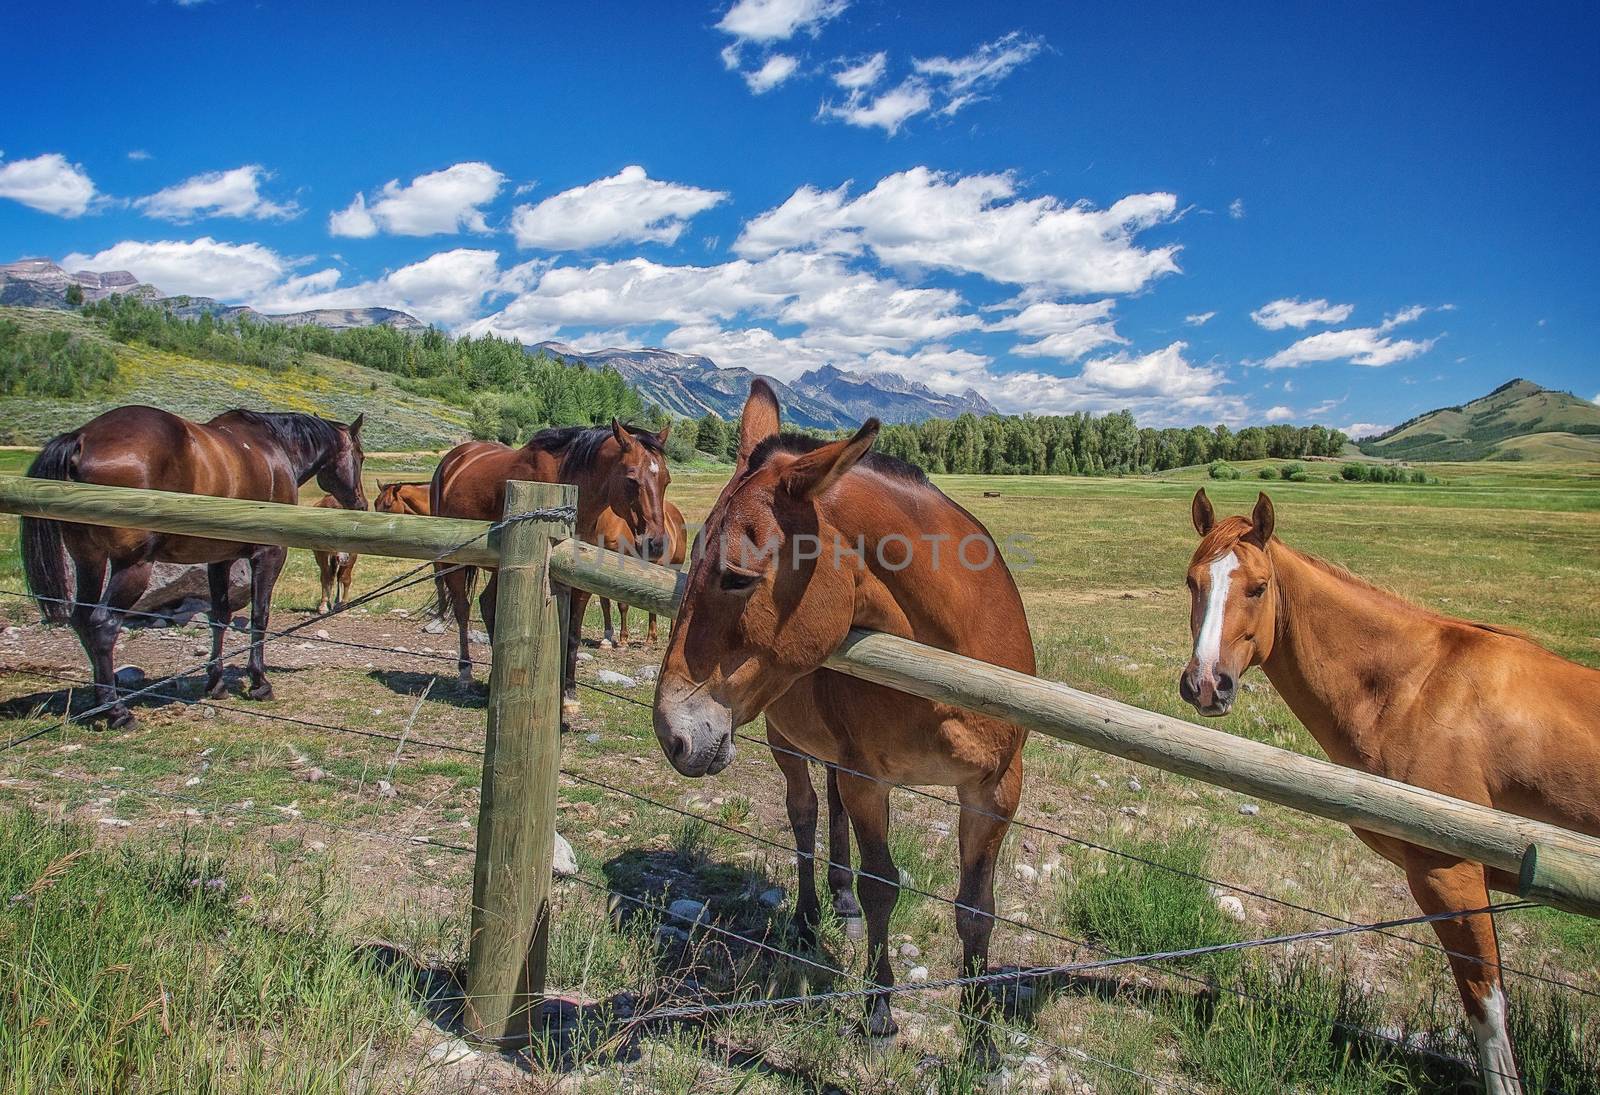 Horses in Jackson Hole by teacherdad48@yahoo.com